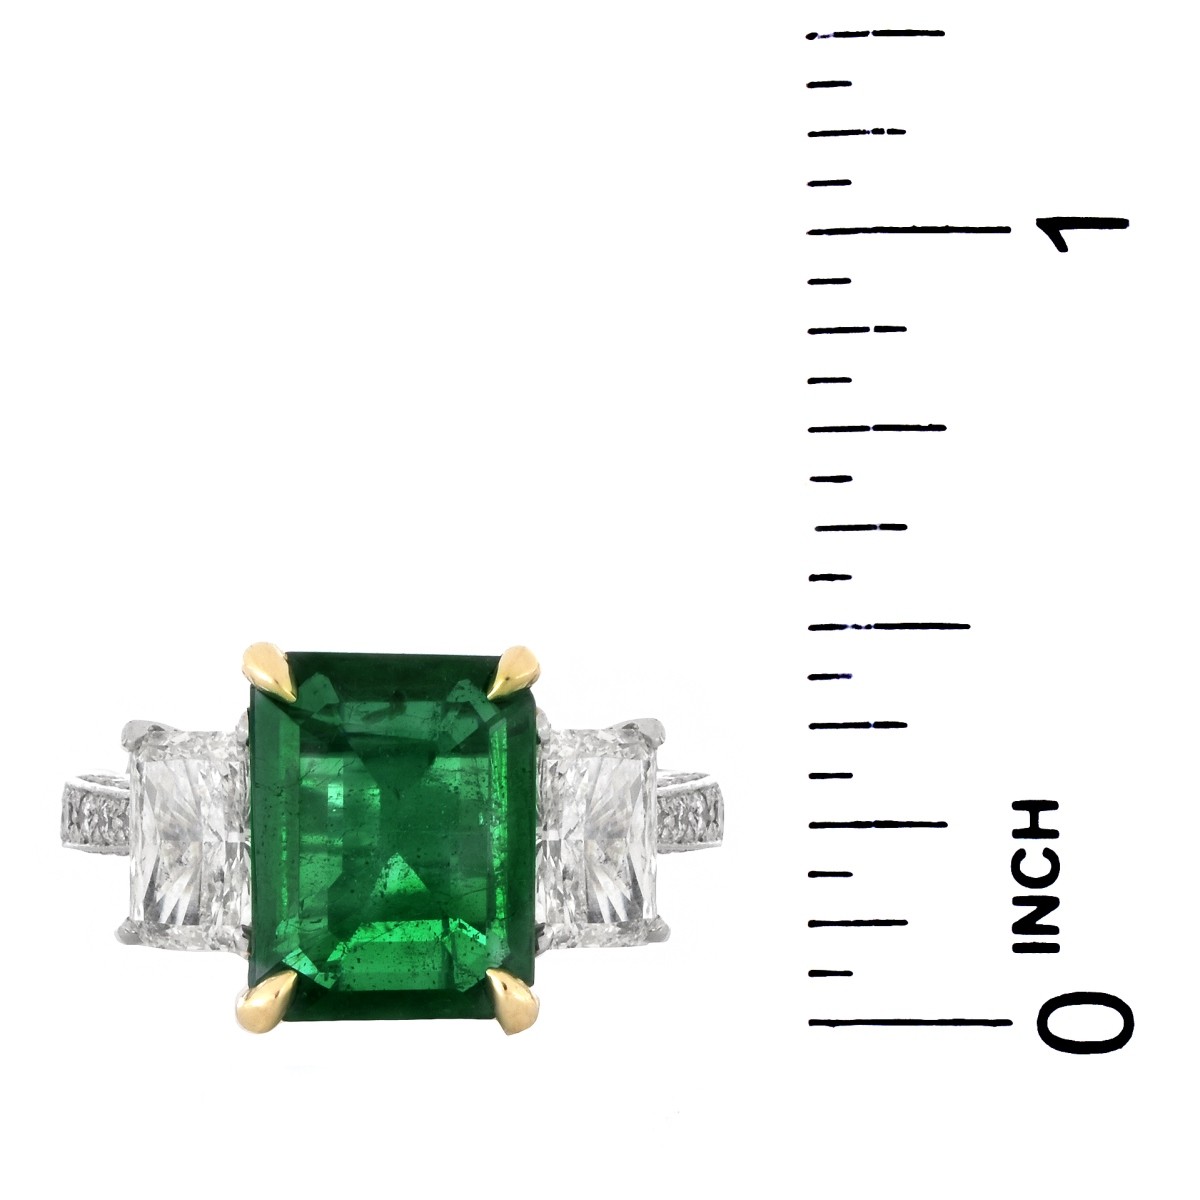 4.87ct Emerald and Diamond Ring